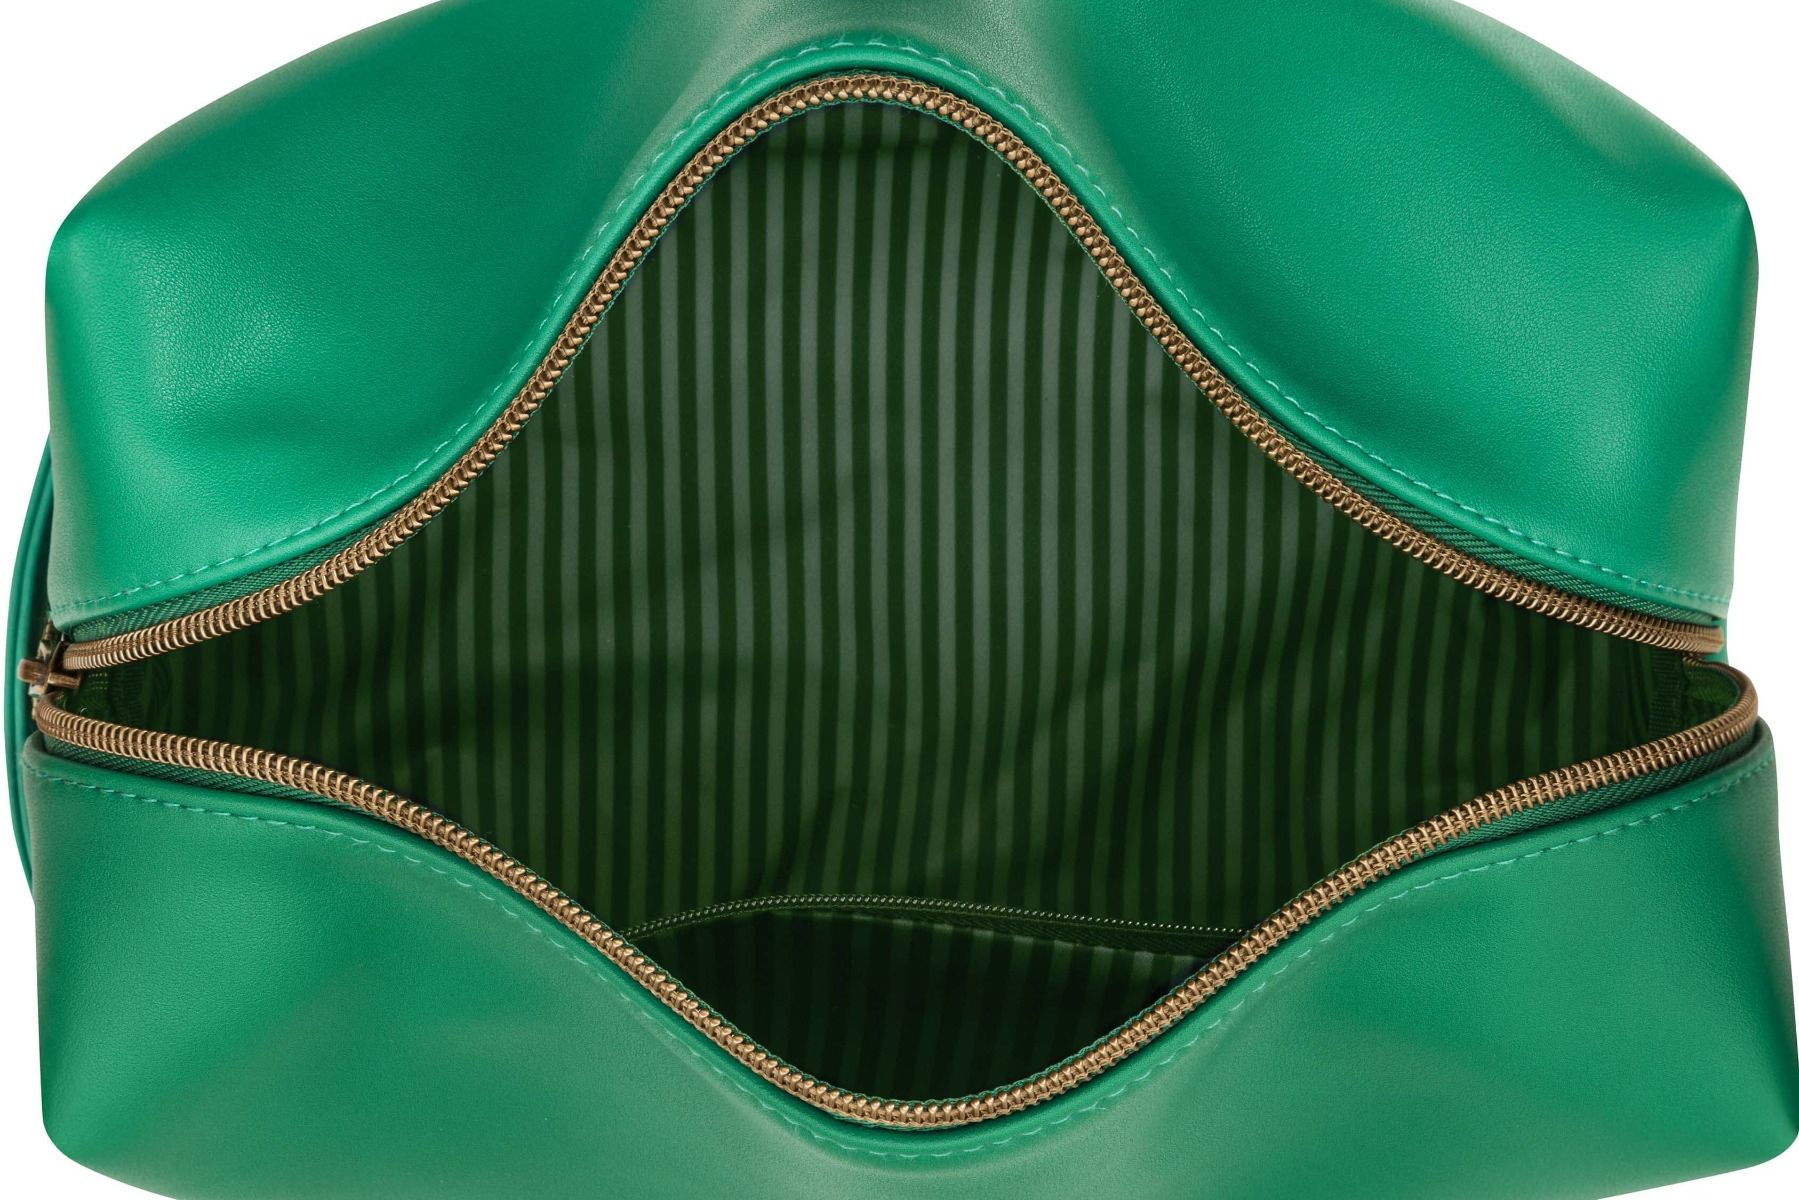 Cosmetic Bag Medium Uni Green